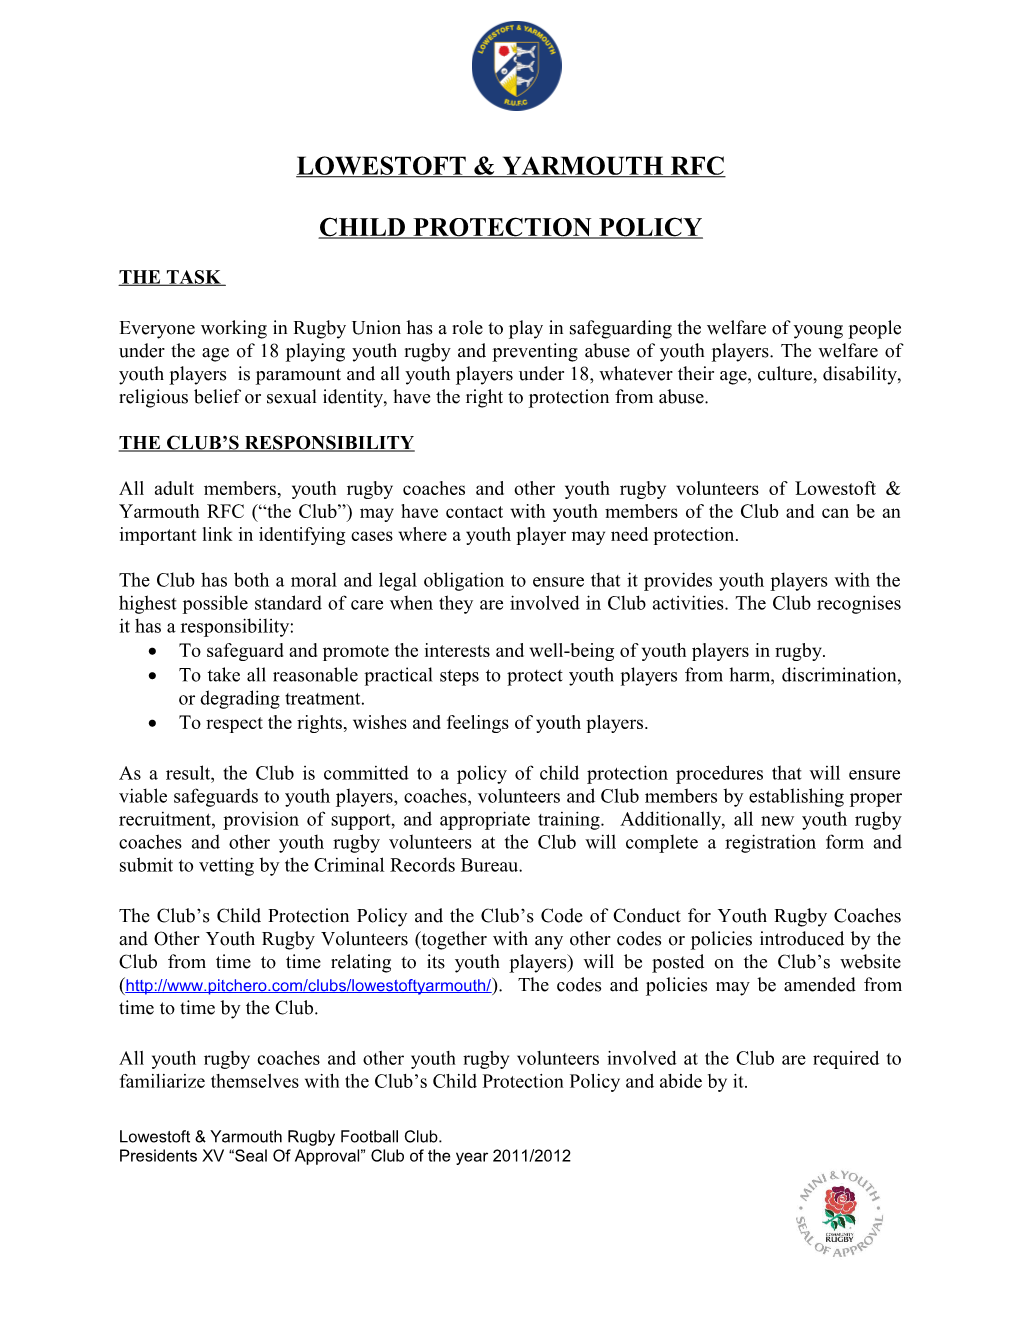 Amersham & Chiltern Rfc Child Protection Policy